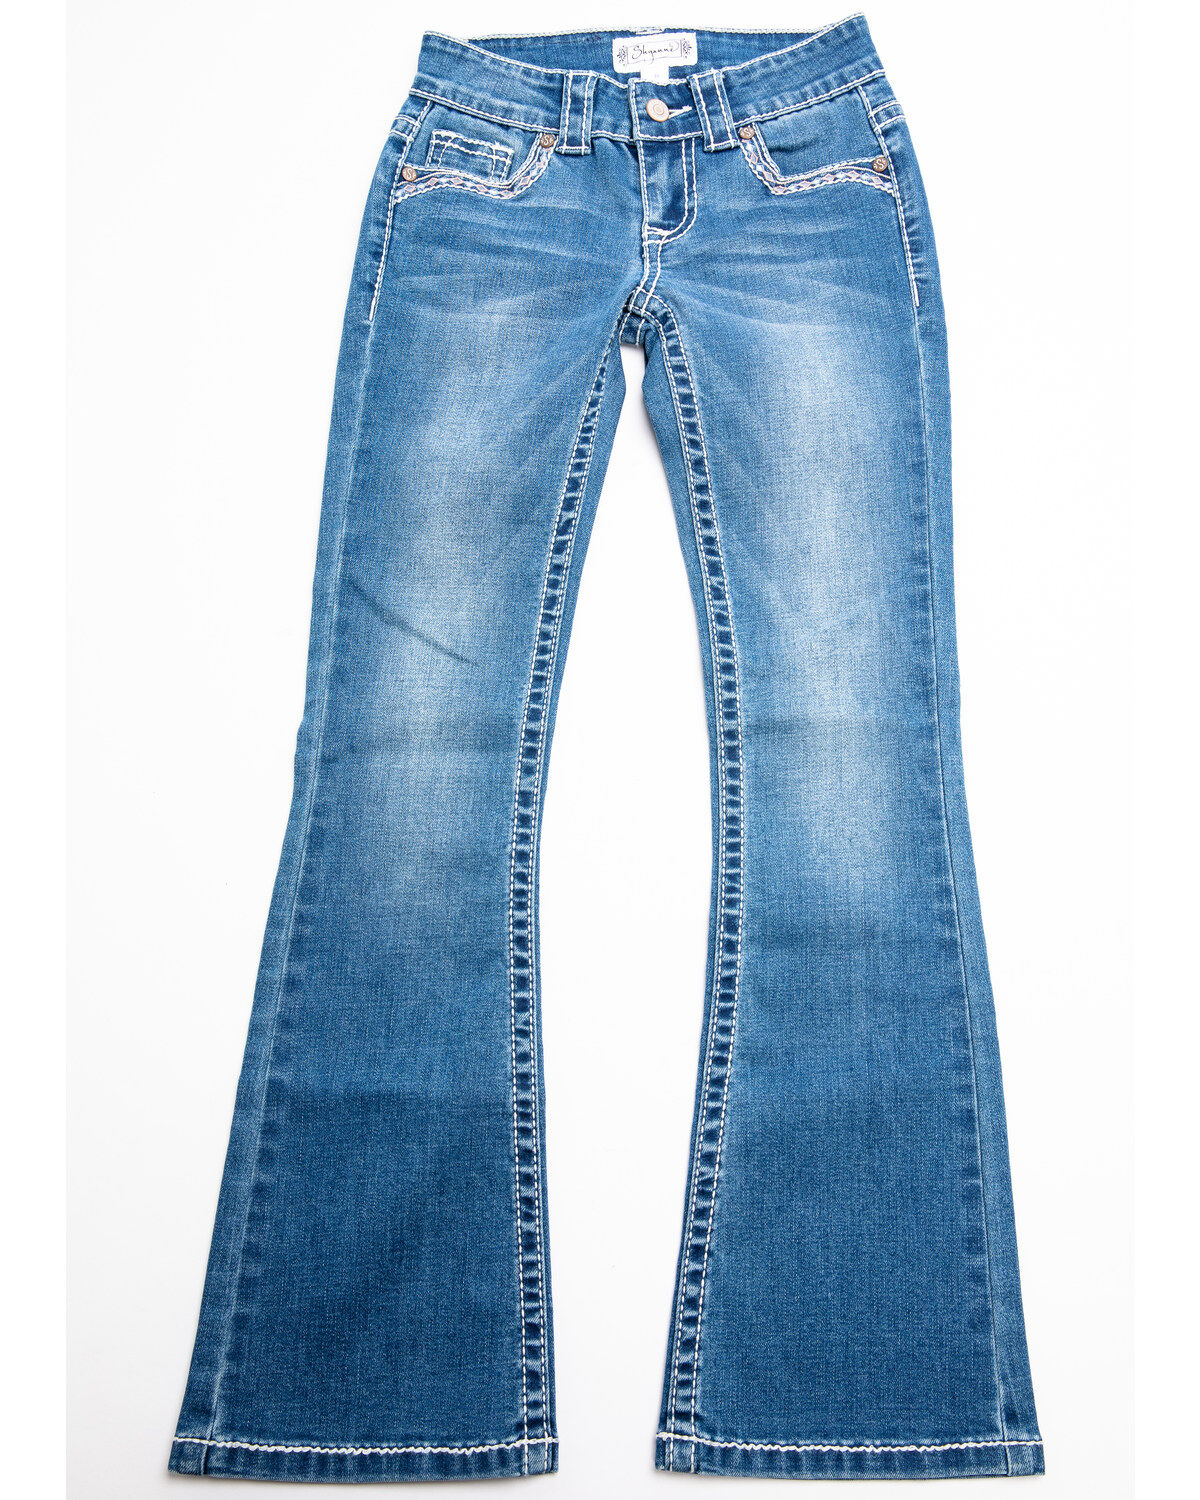 Shyanne Jeans Size Chart